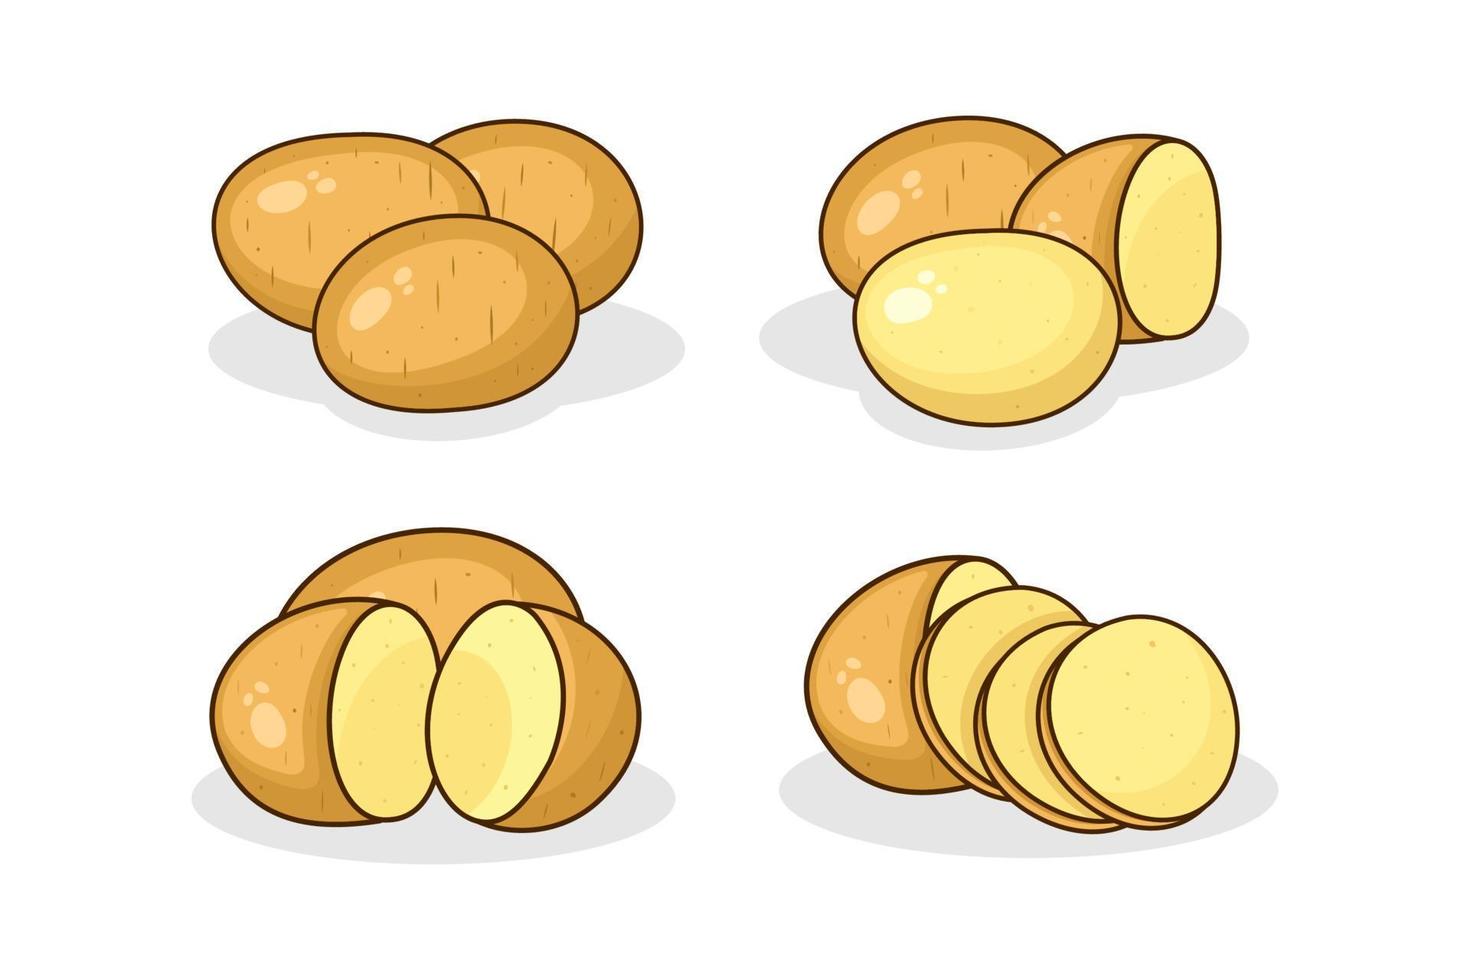 Peeled and unpeeled whole potato vector image design illustration